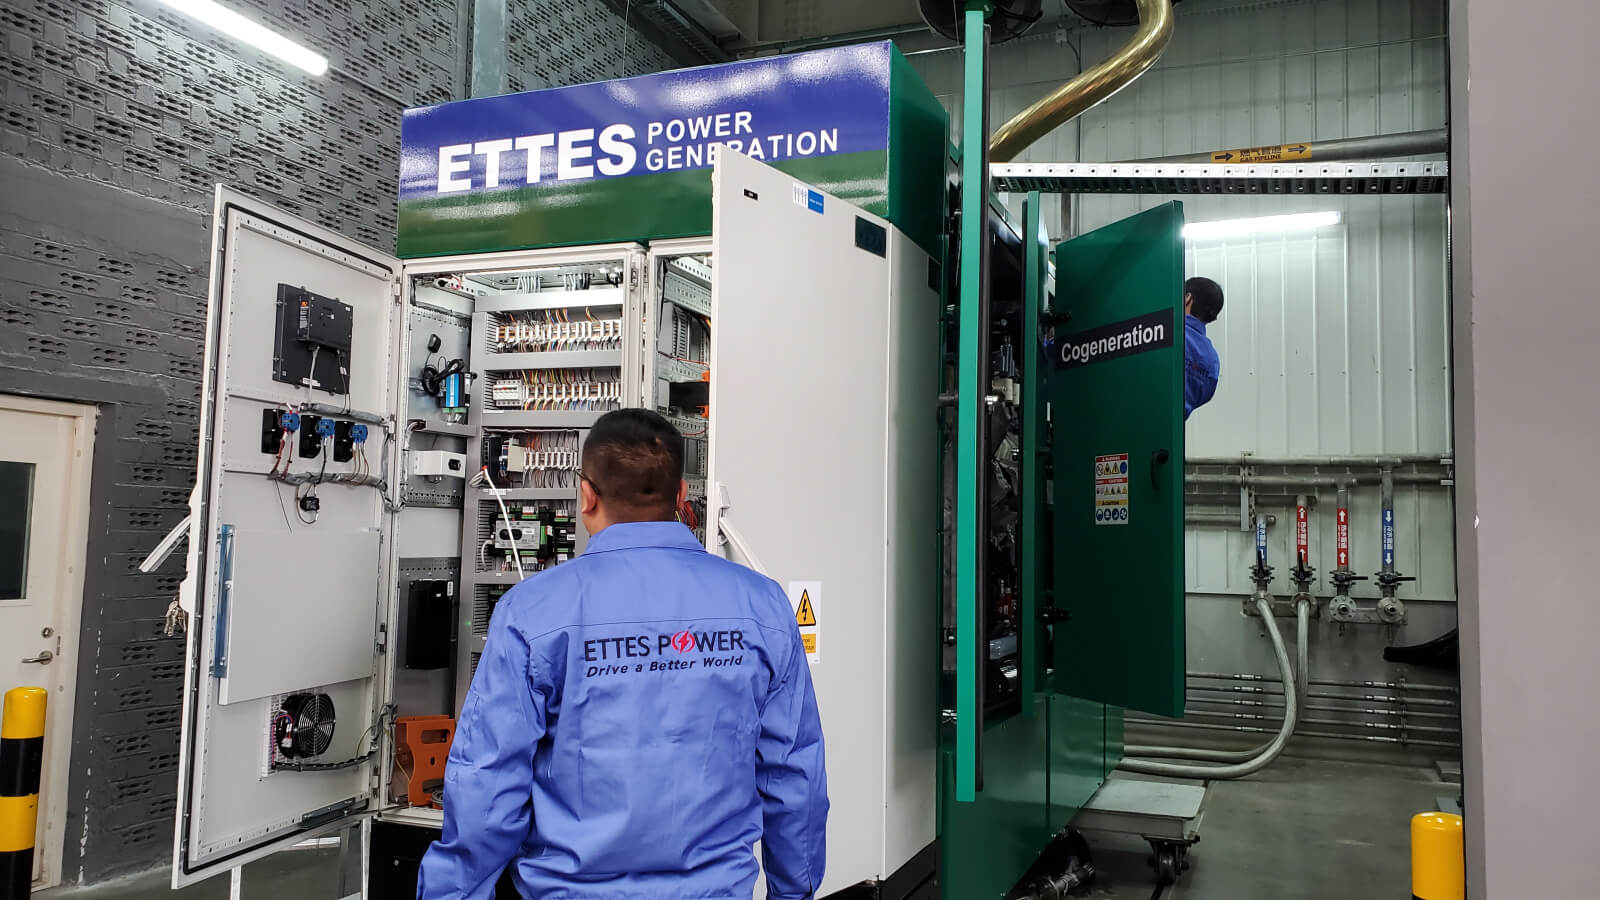 Ettes Power MAN 500kW Natural Gas Generator Set CHP Motortech Control System EttesPower